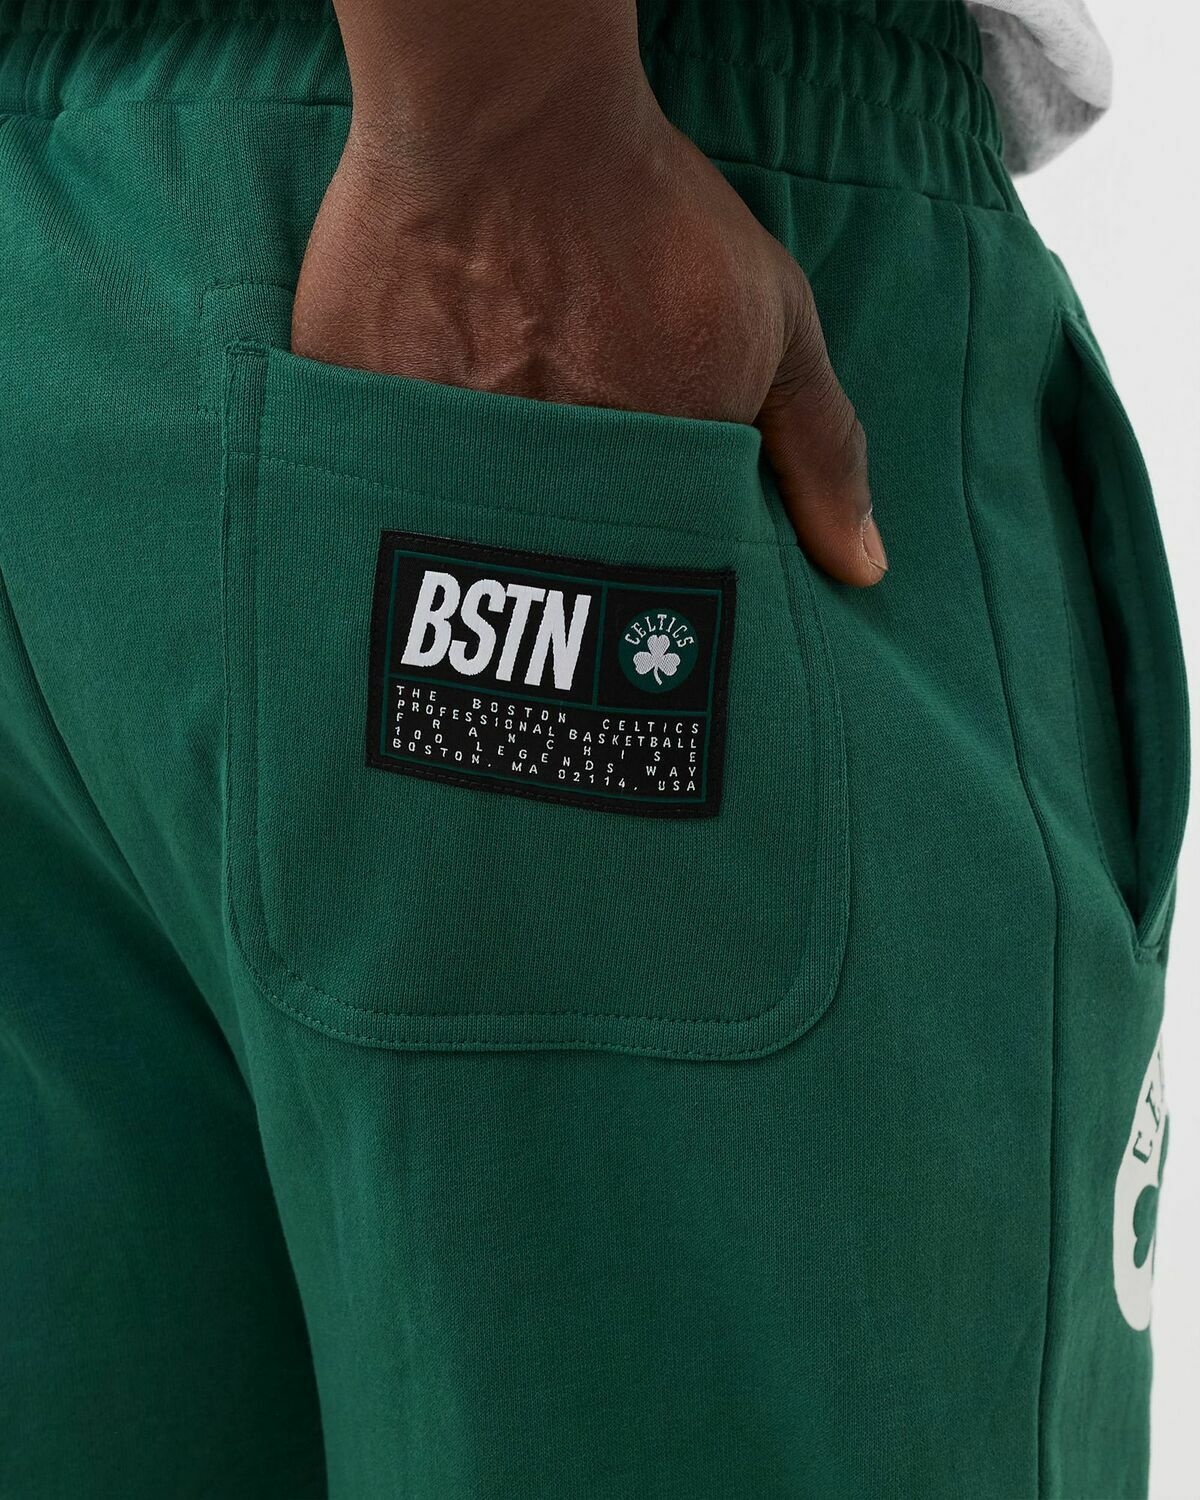 Bstn Brand Bstn & Nba Boston Celtics Sweatpants Green - Mens - Sweatpants